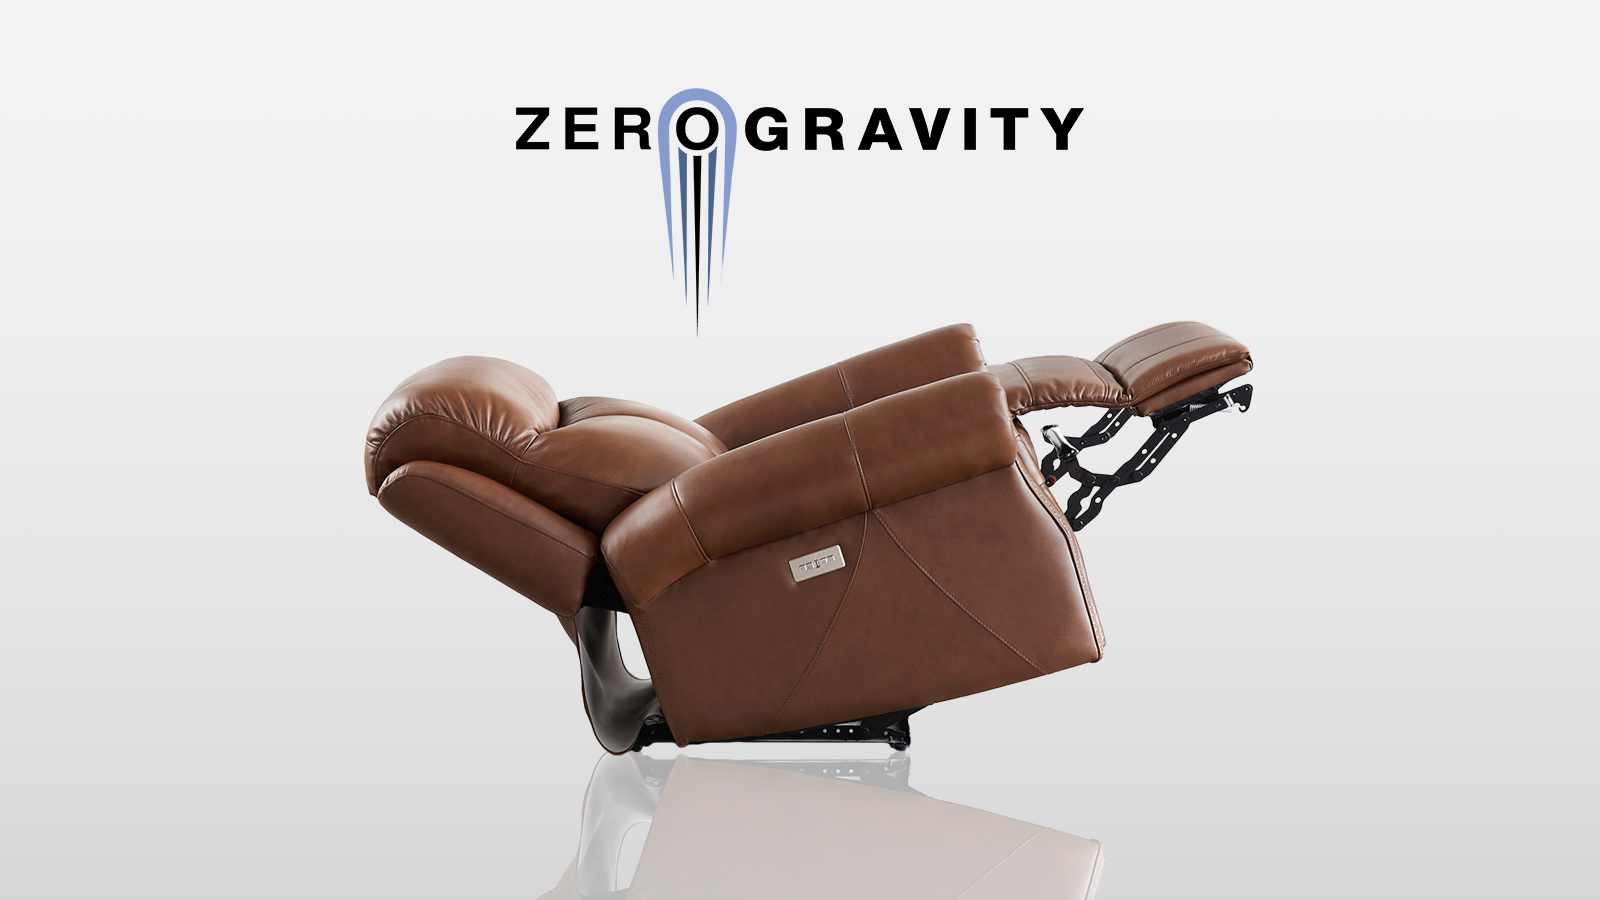 zero-gravity-banner-2.jpg